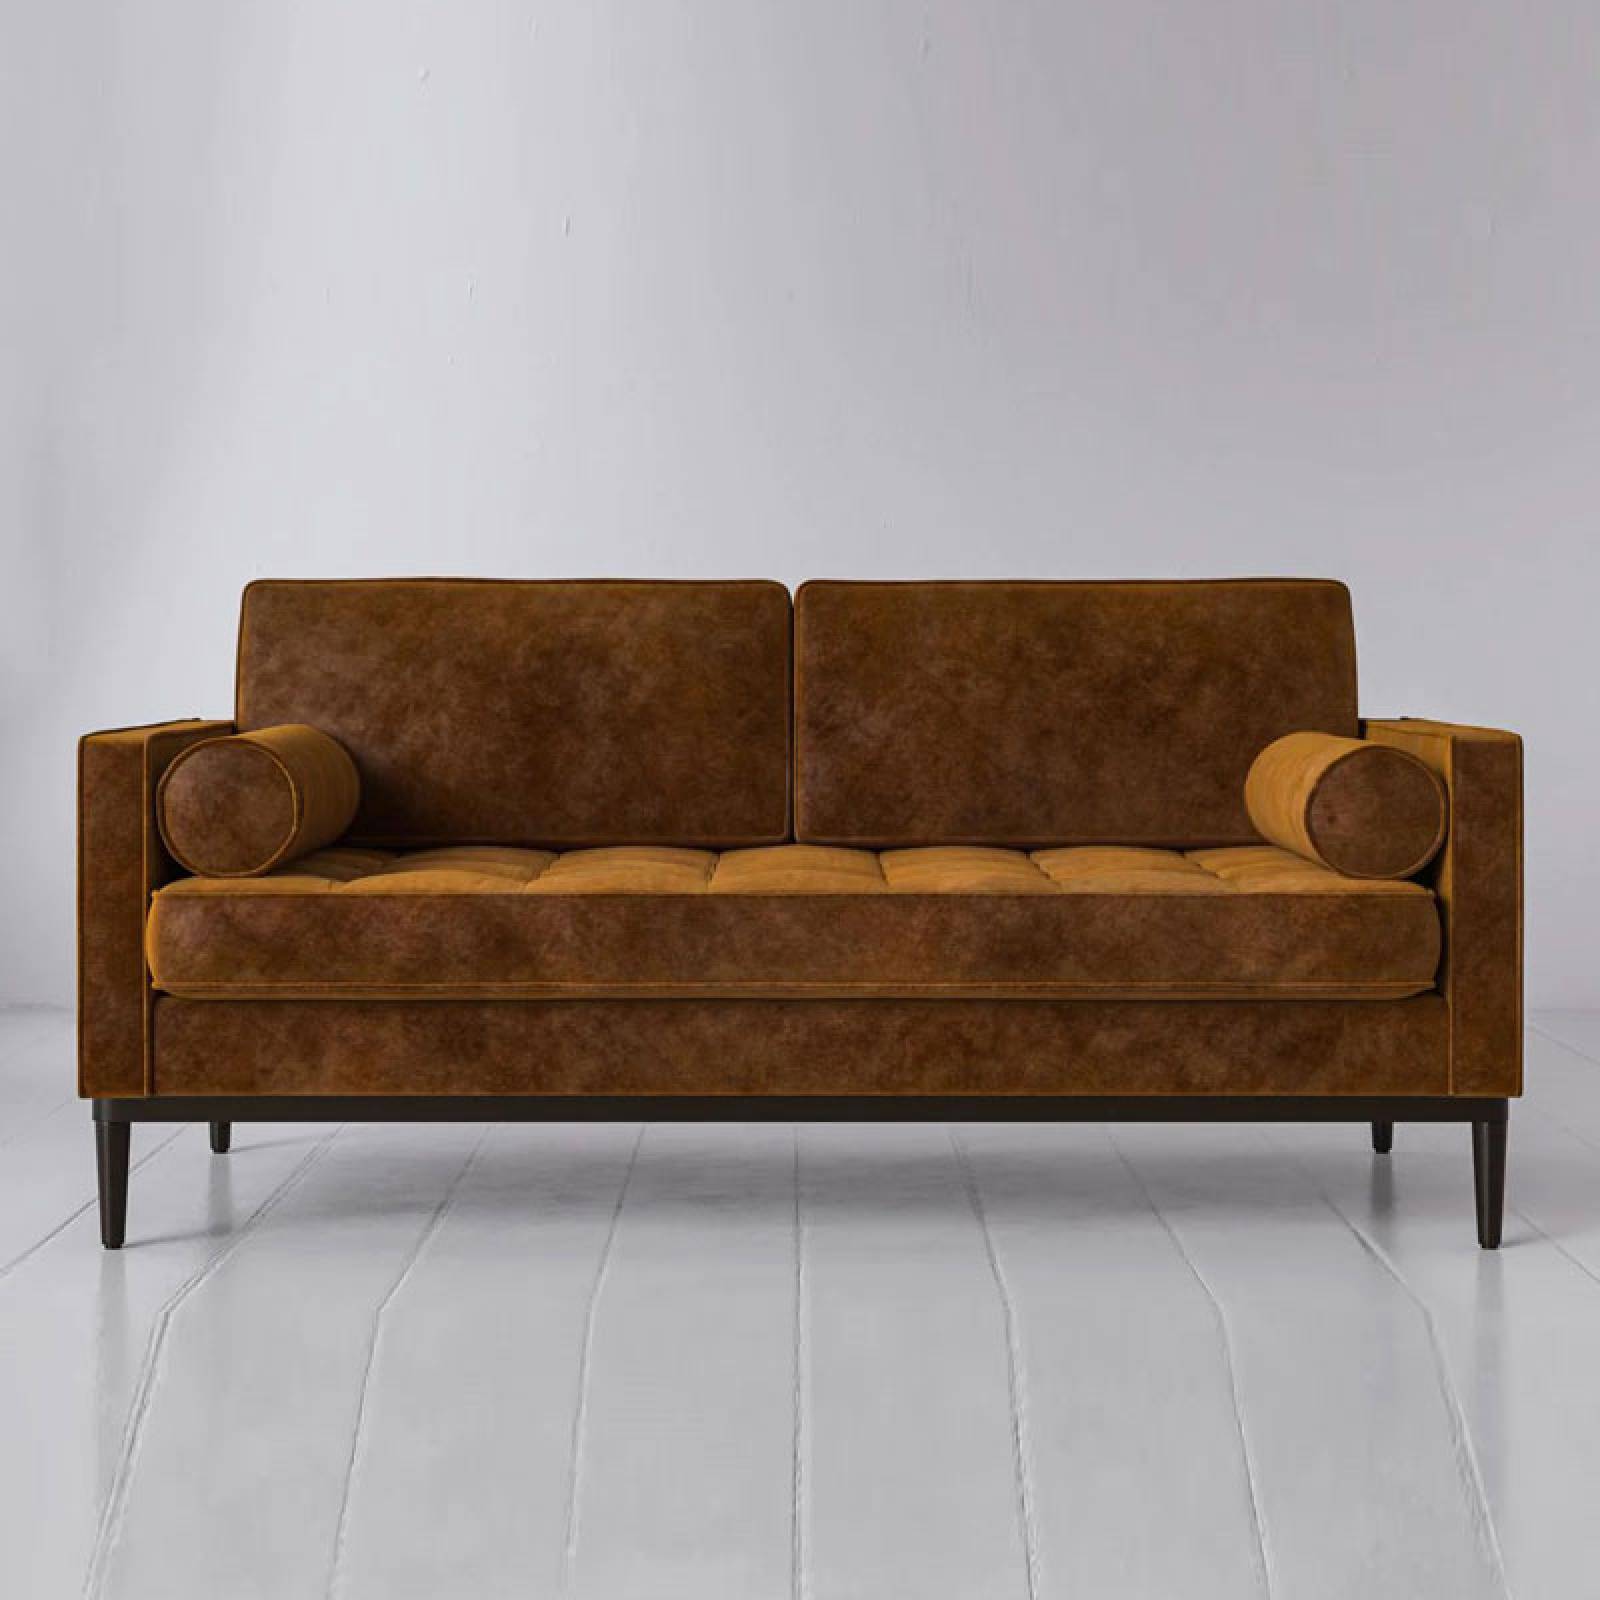 Swyft - Model 02 - 2 Seater Sofa